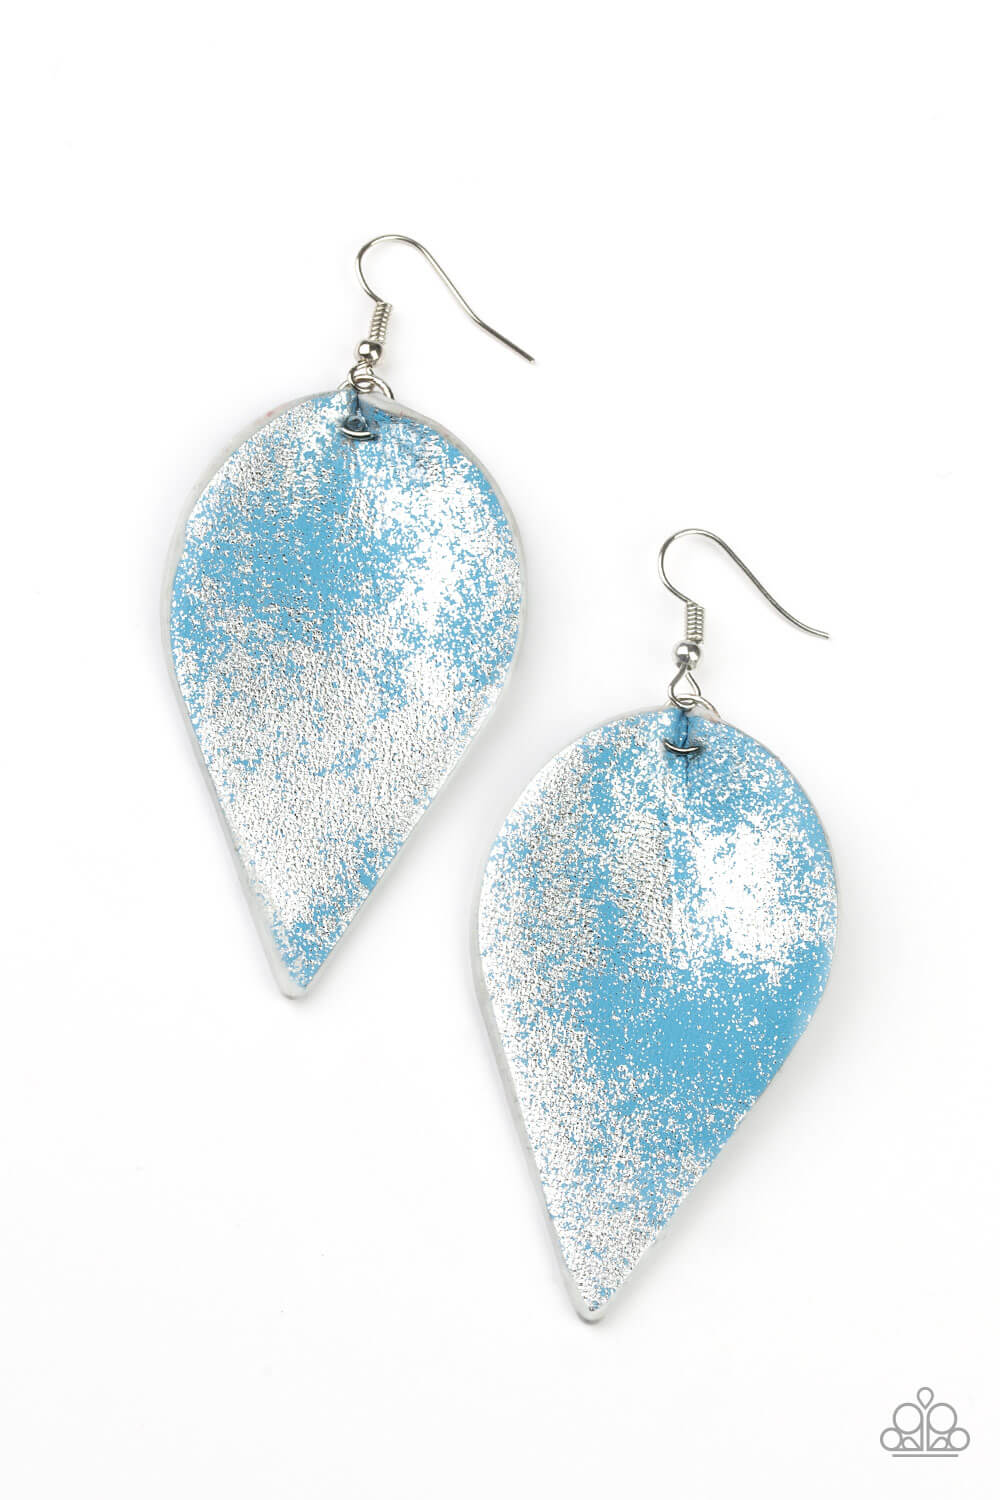 Enchanted Shimmer - Blue Leather Earrings - Princess Glam Shop